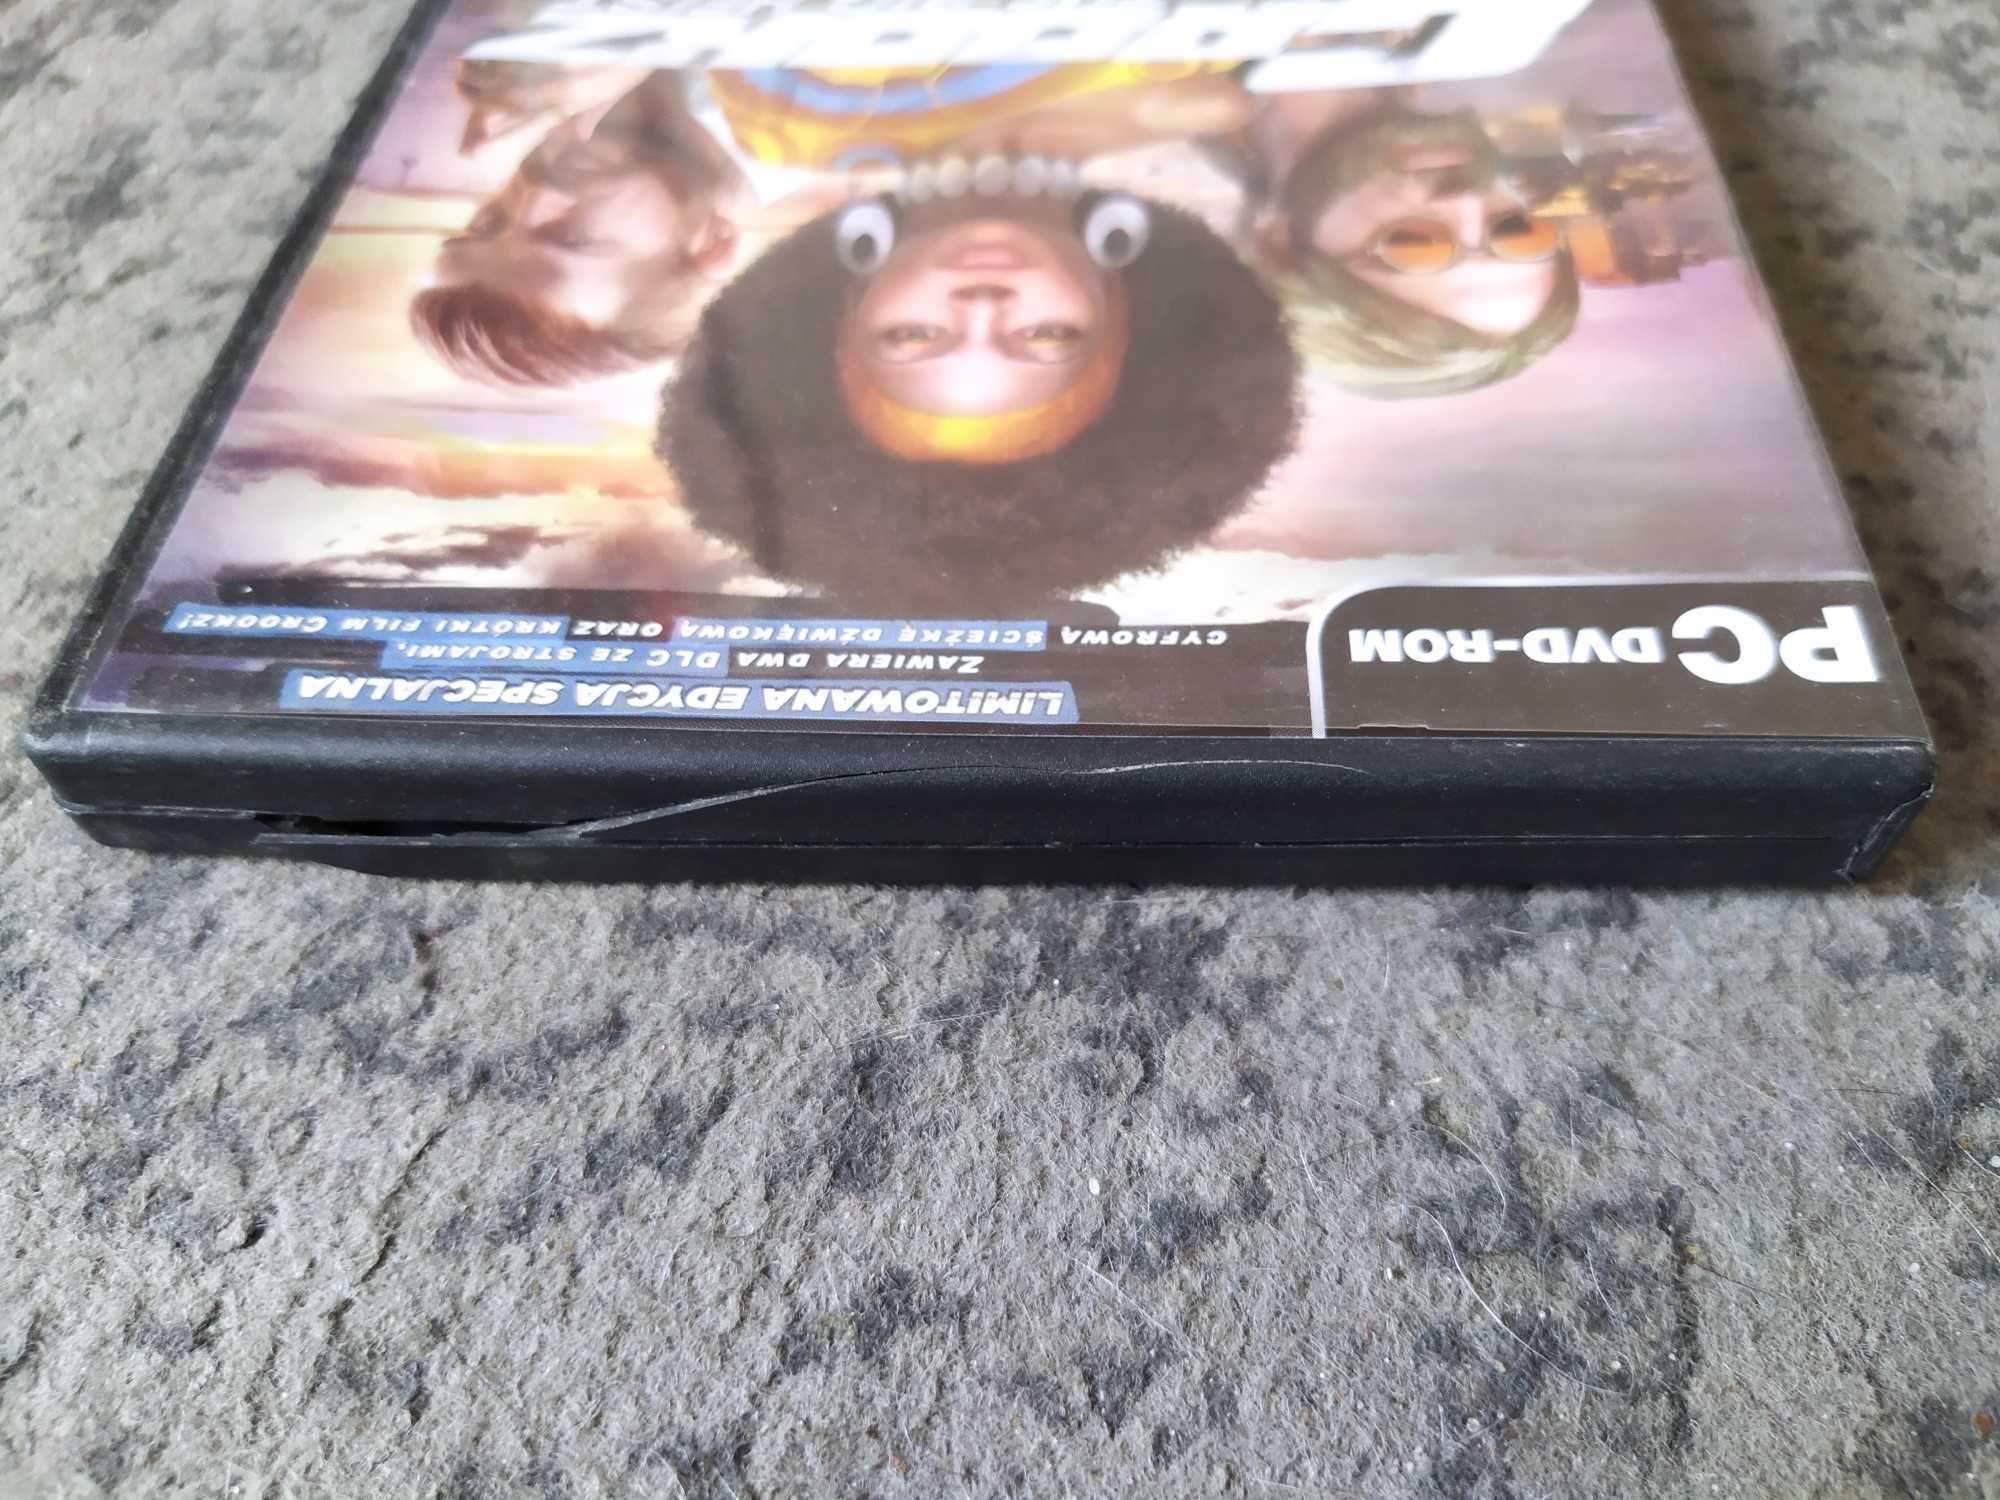 Crookz - The Big Heist PC DVD